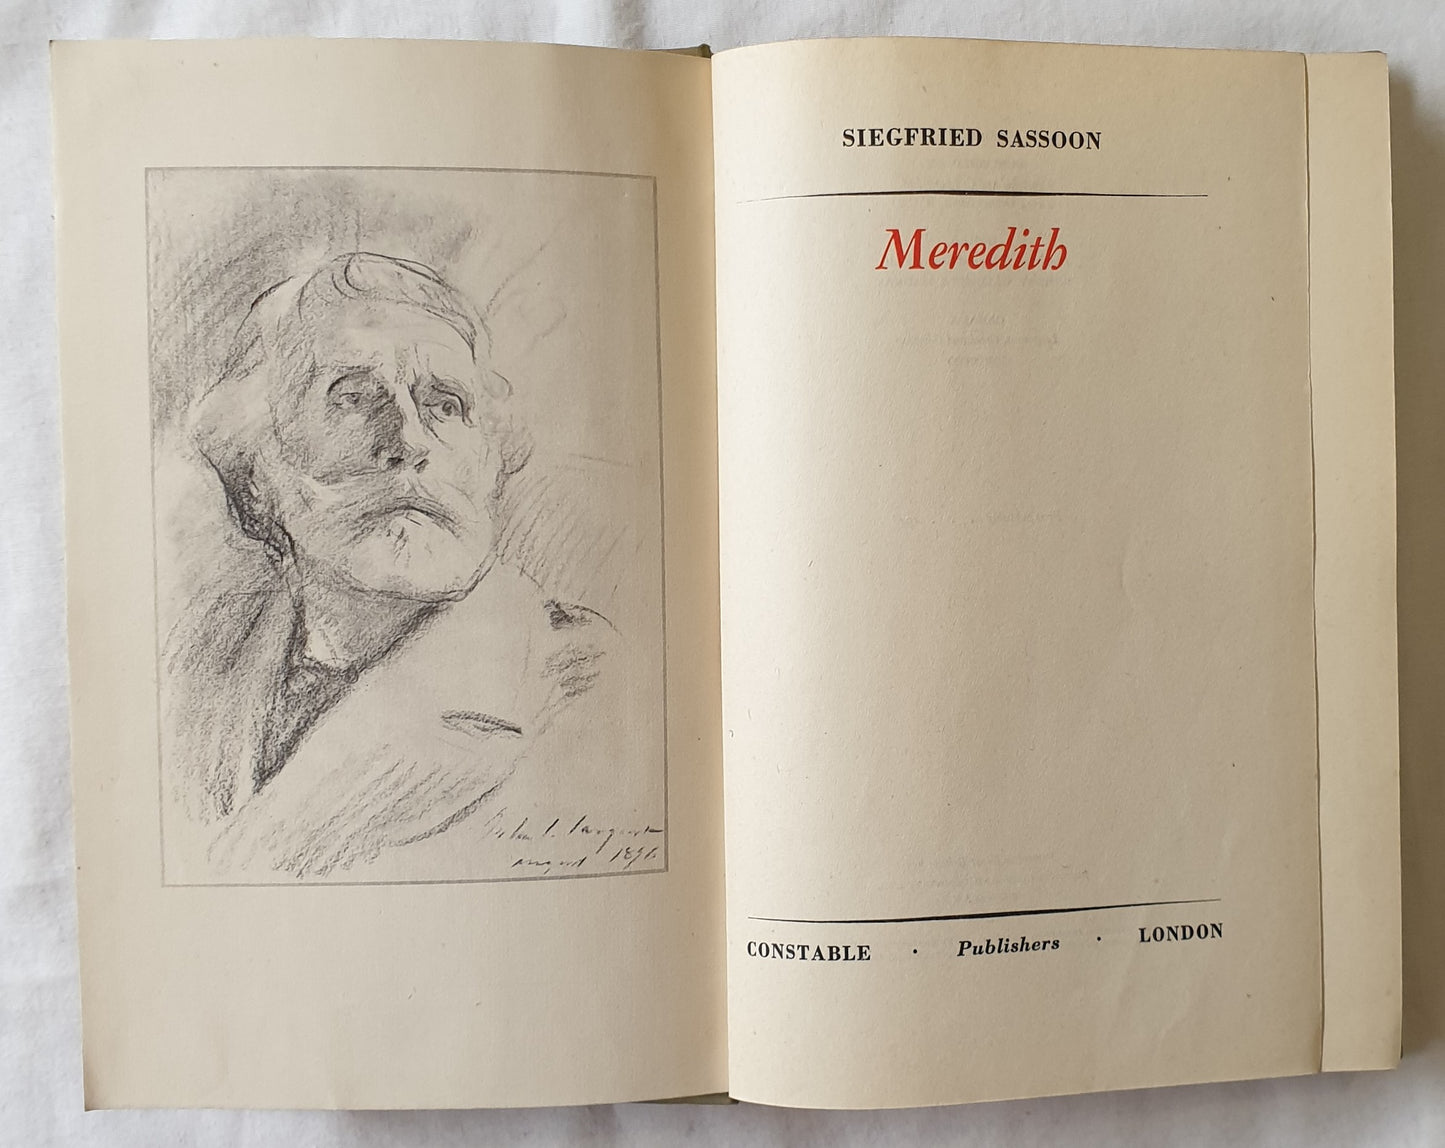 Meredith by Siegfried Sassoon